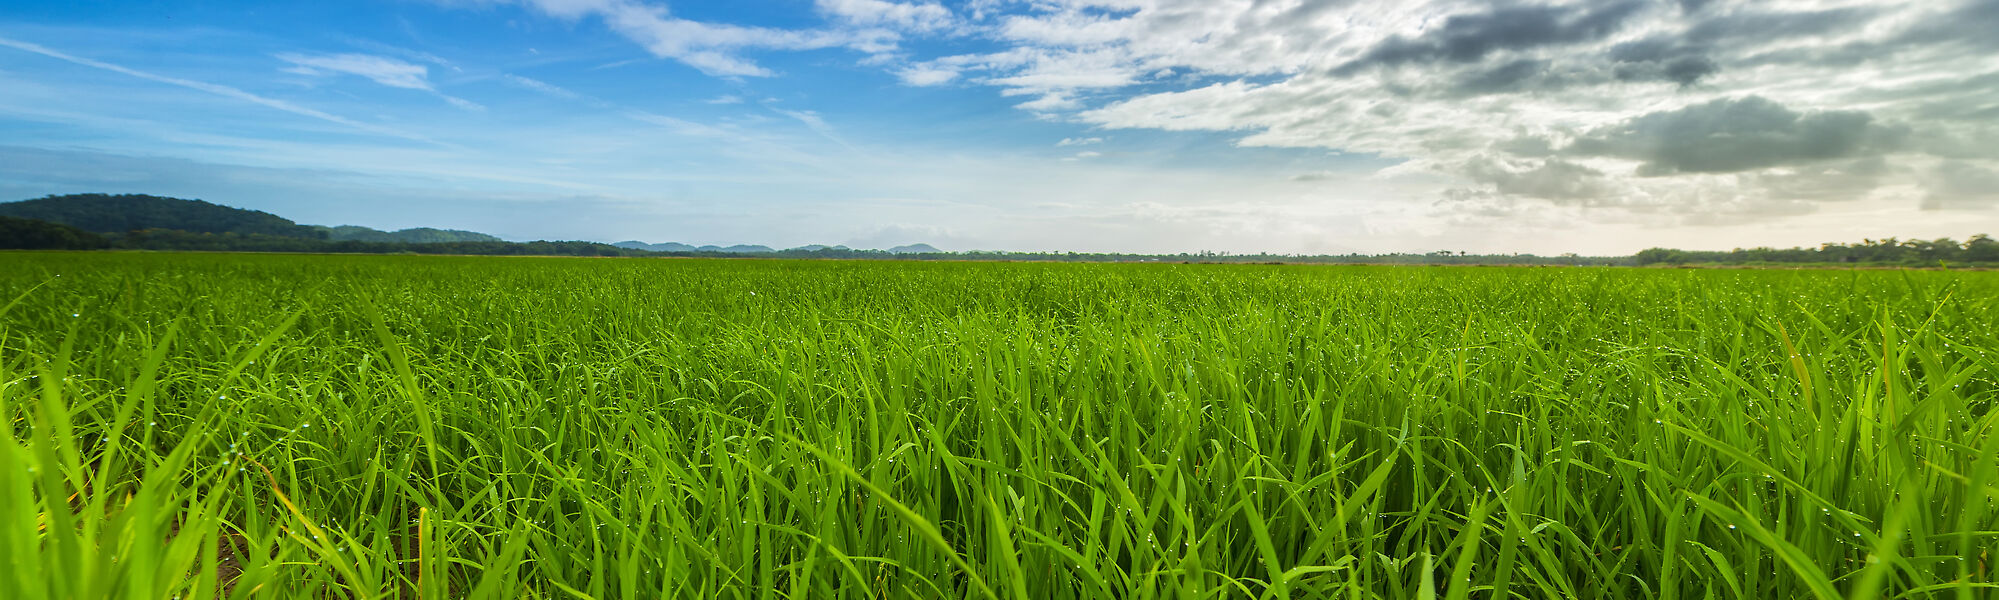 Nelson rice sprinkler irrigation system for farms